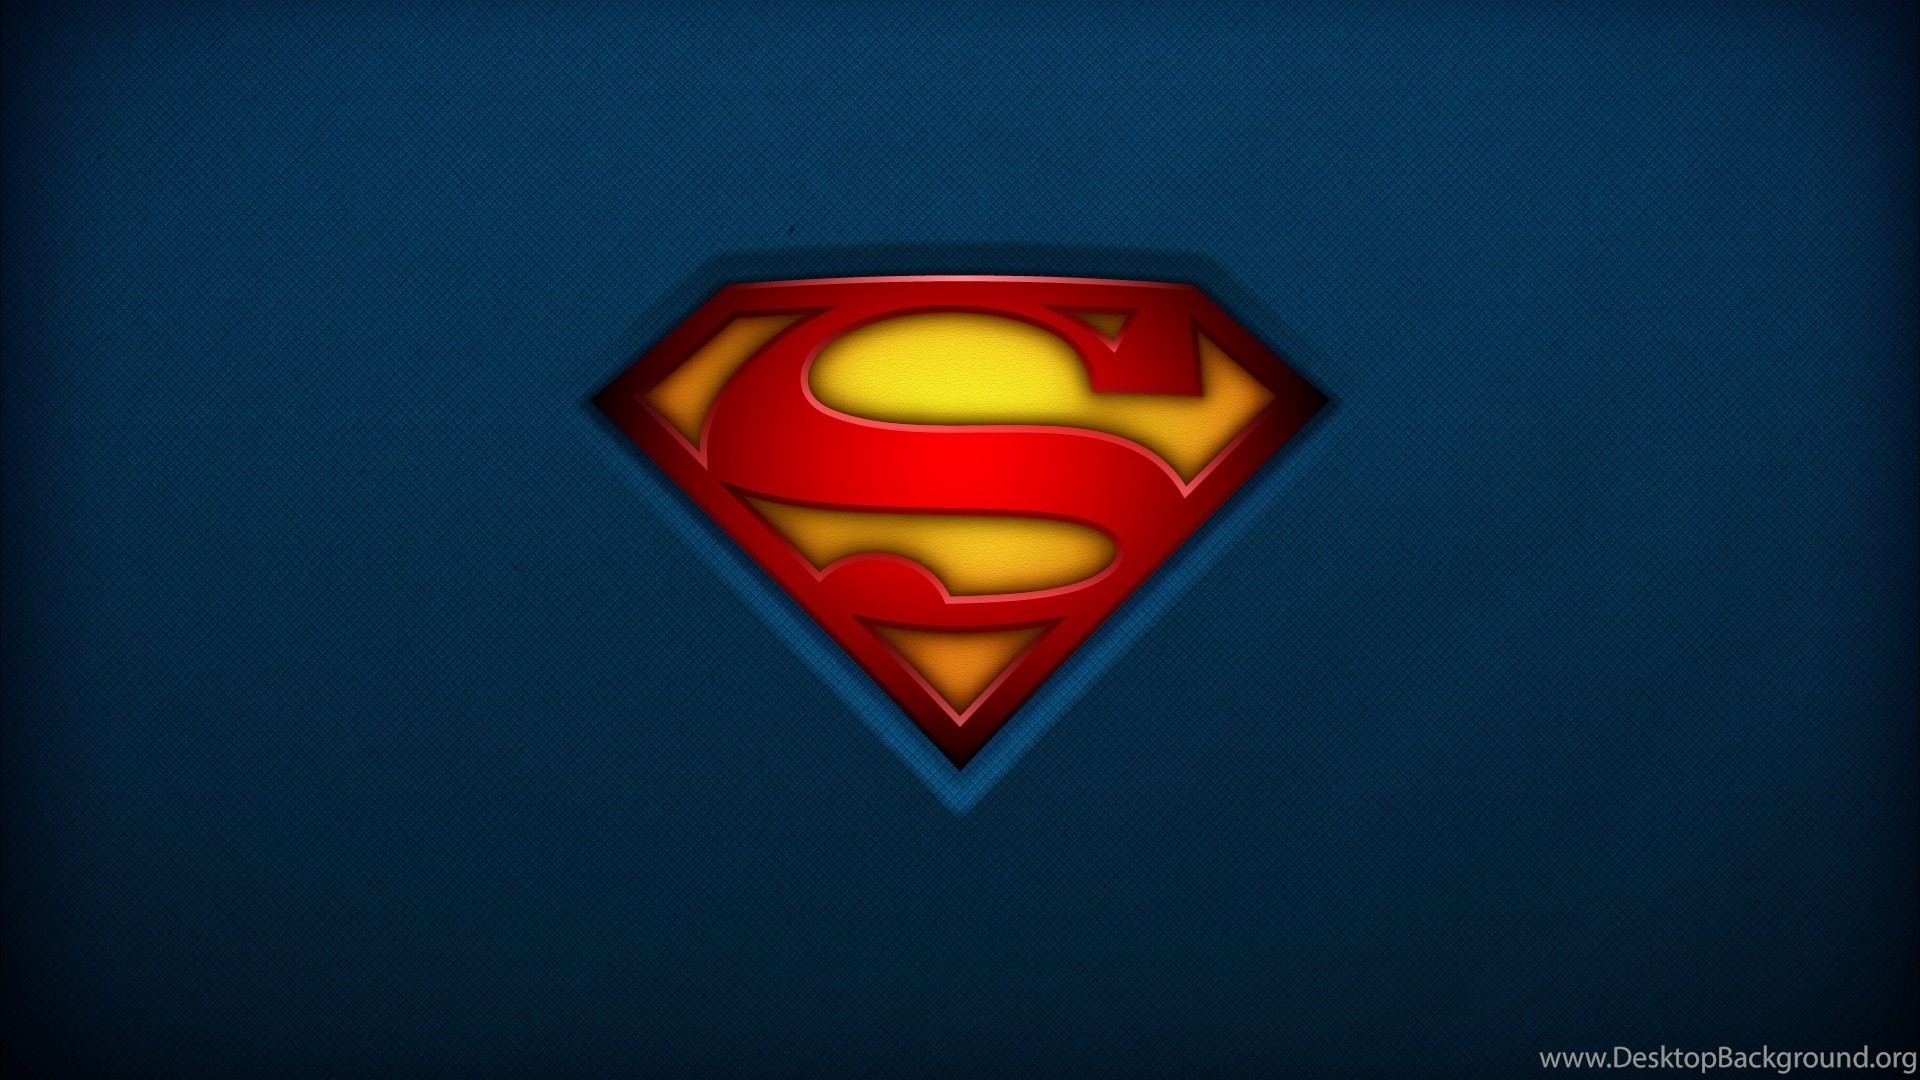 1920x1080 superman logo wallpapers hd 1920Ã1080 desktop background